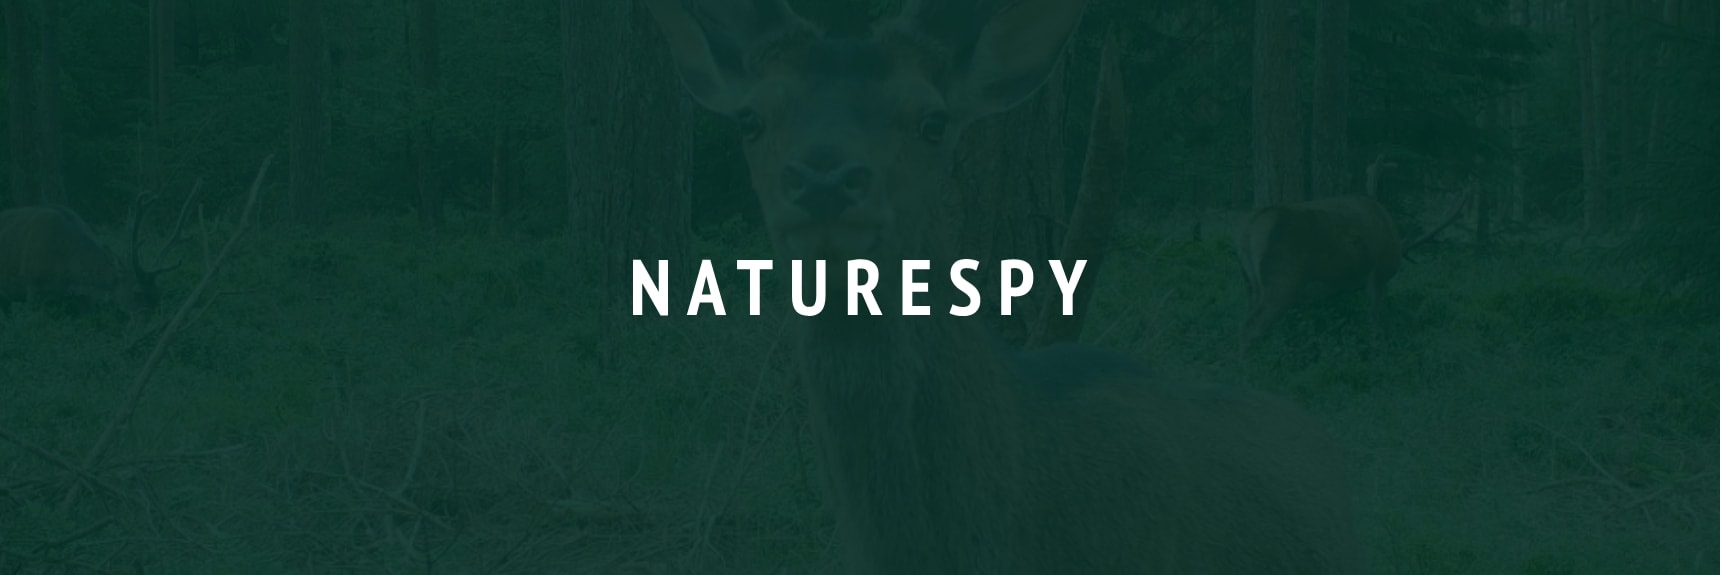 NatureSpy logo